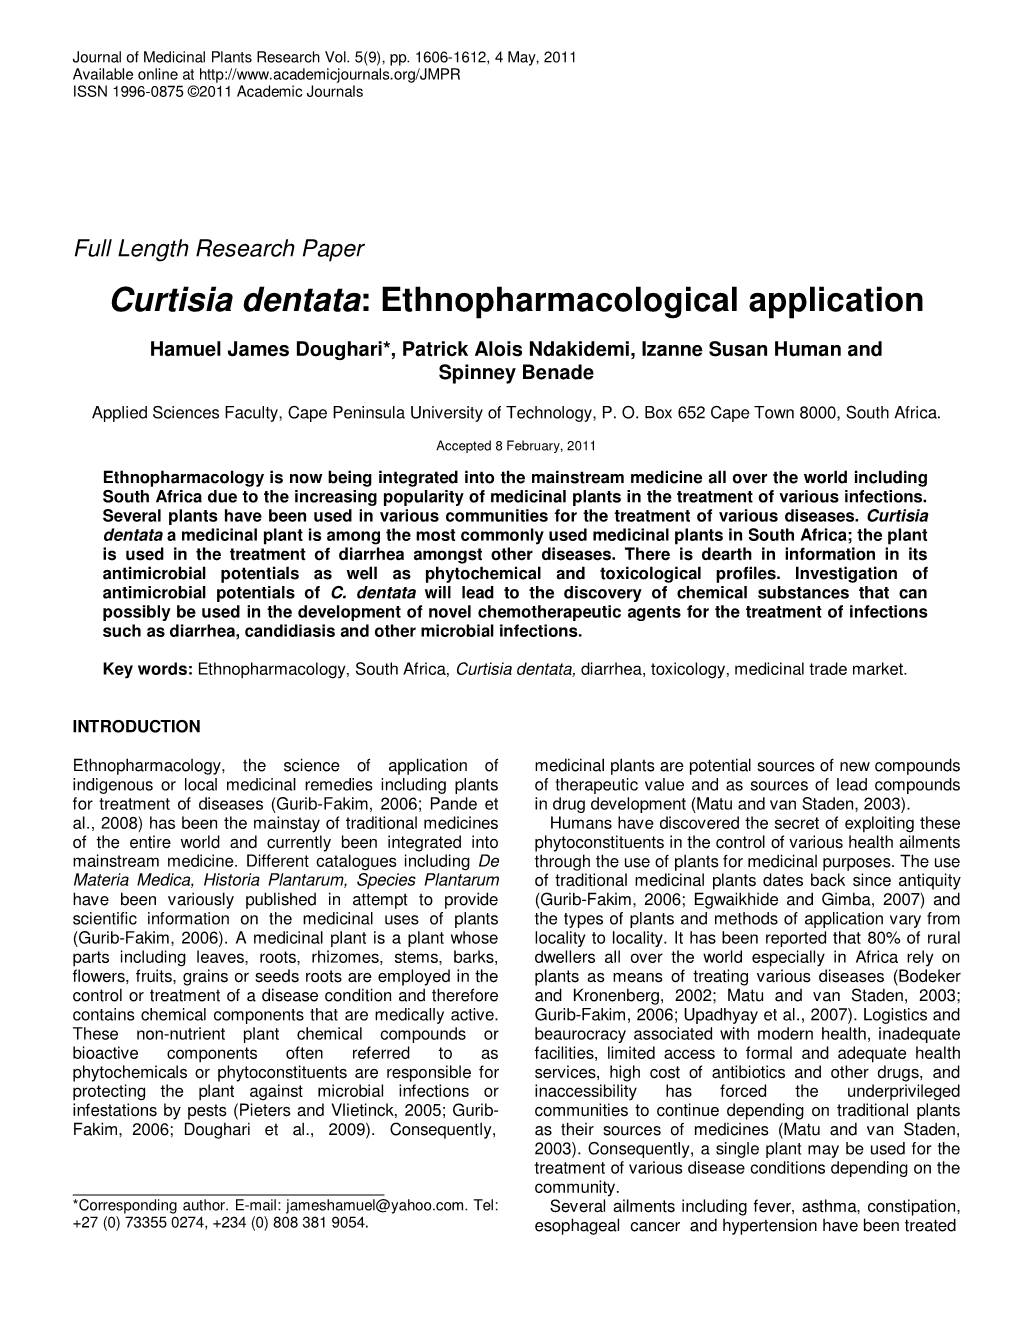 Curtisia Dentata: Ethnopharmacological Application